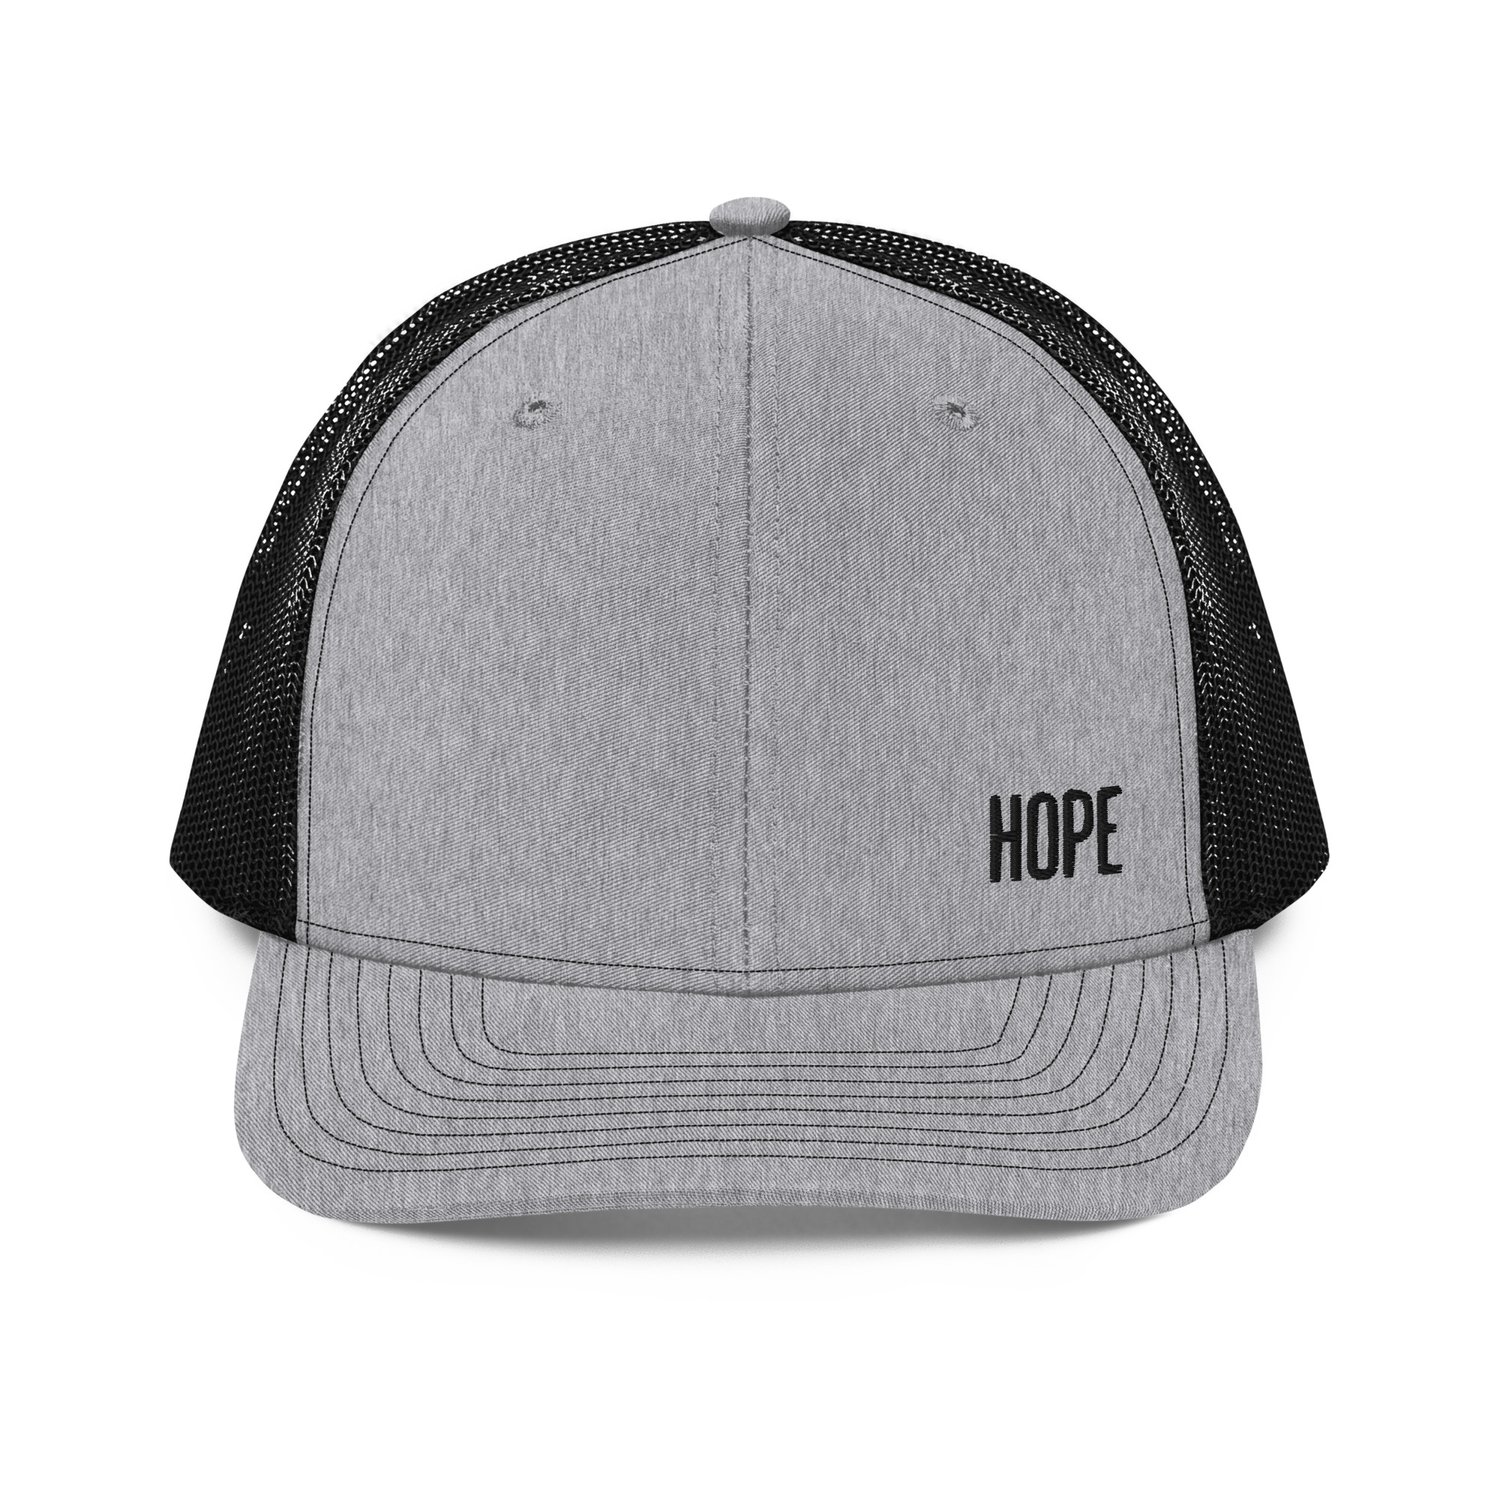 HOPE - Mesh Back Cap — Mission Church